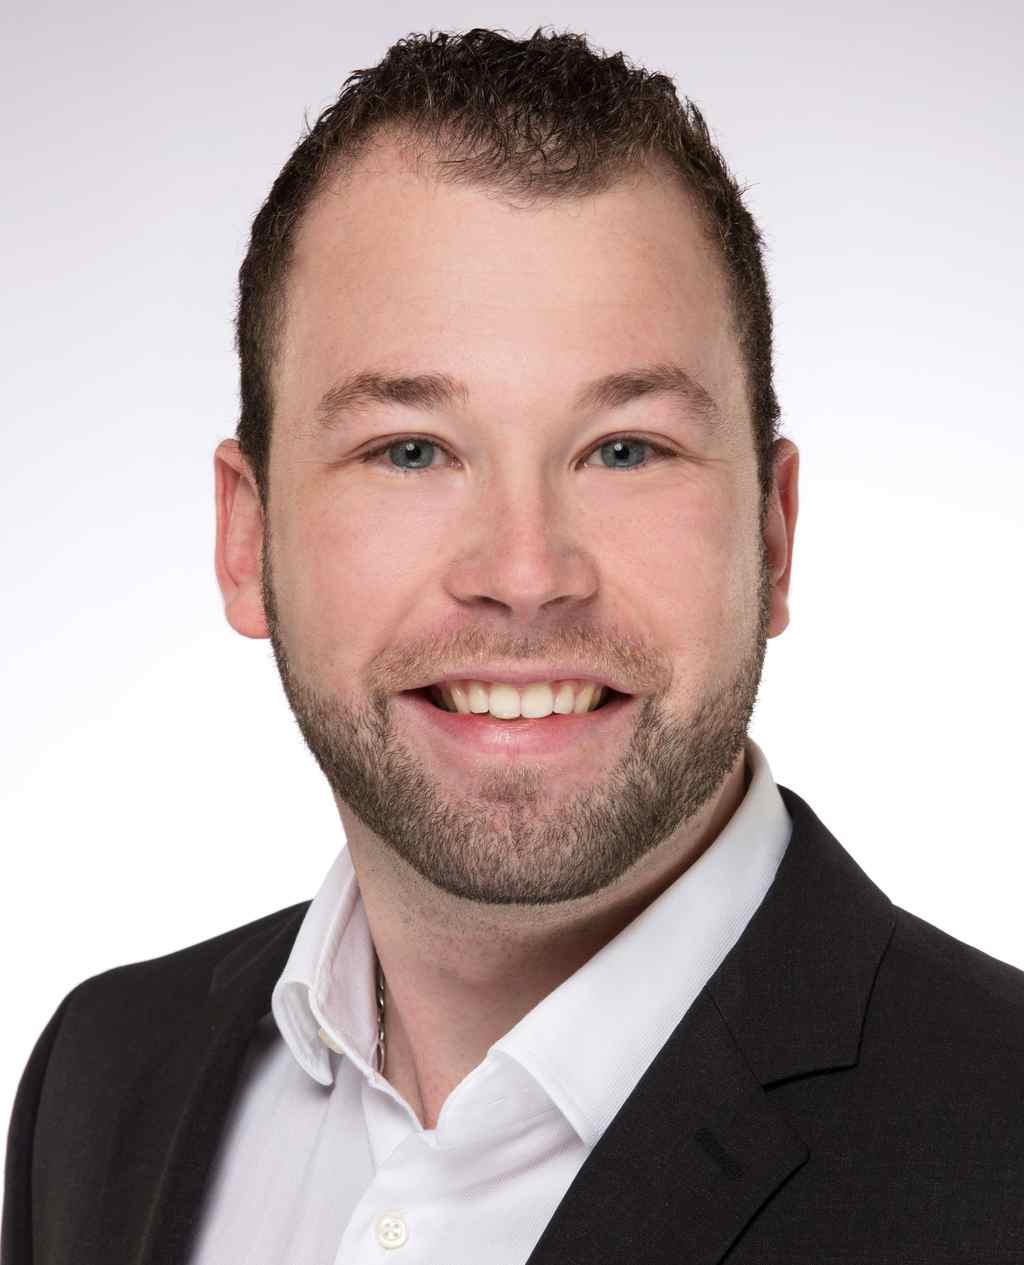 Dominik Schmid, product manager & marketing, Liechti Engineering